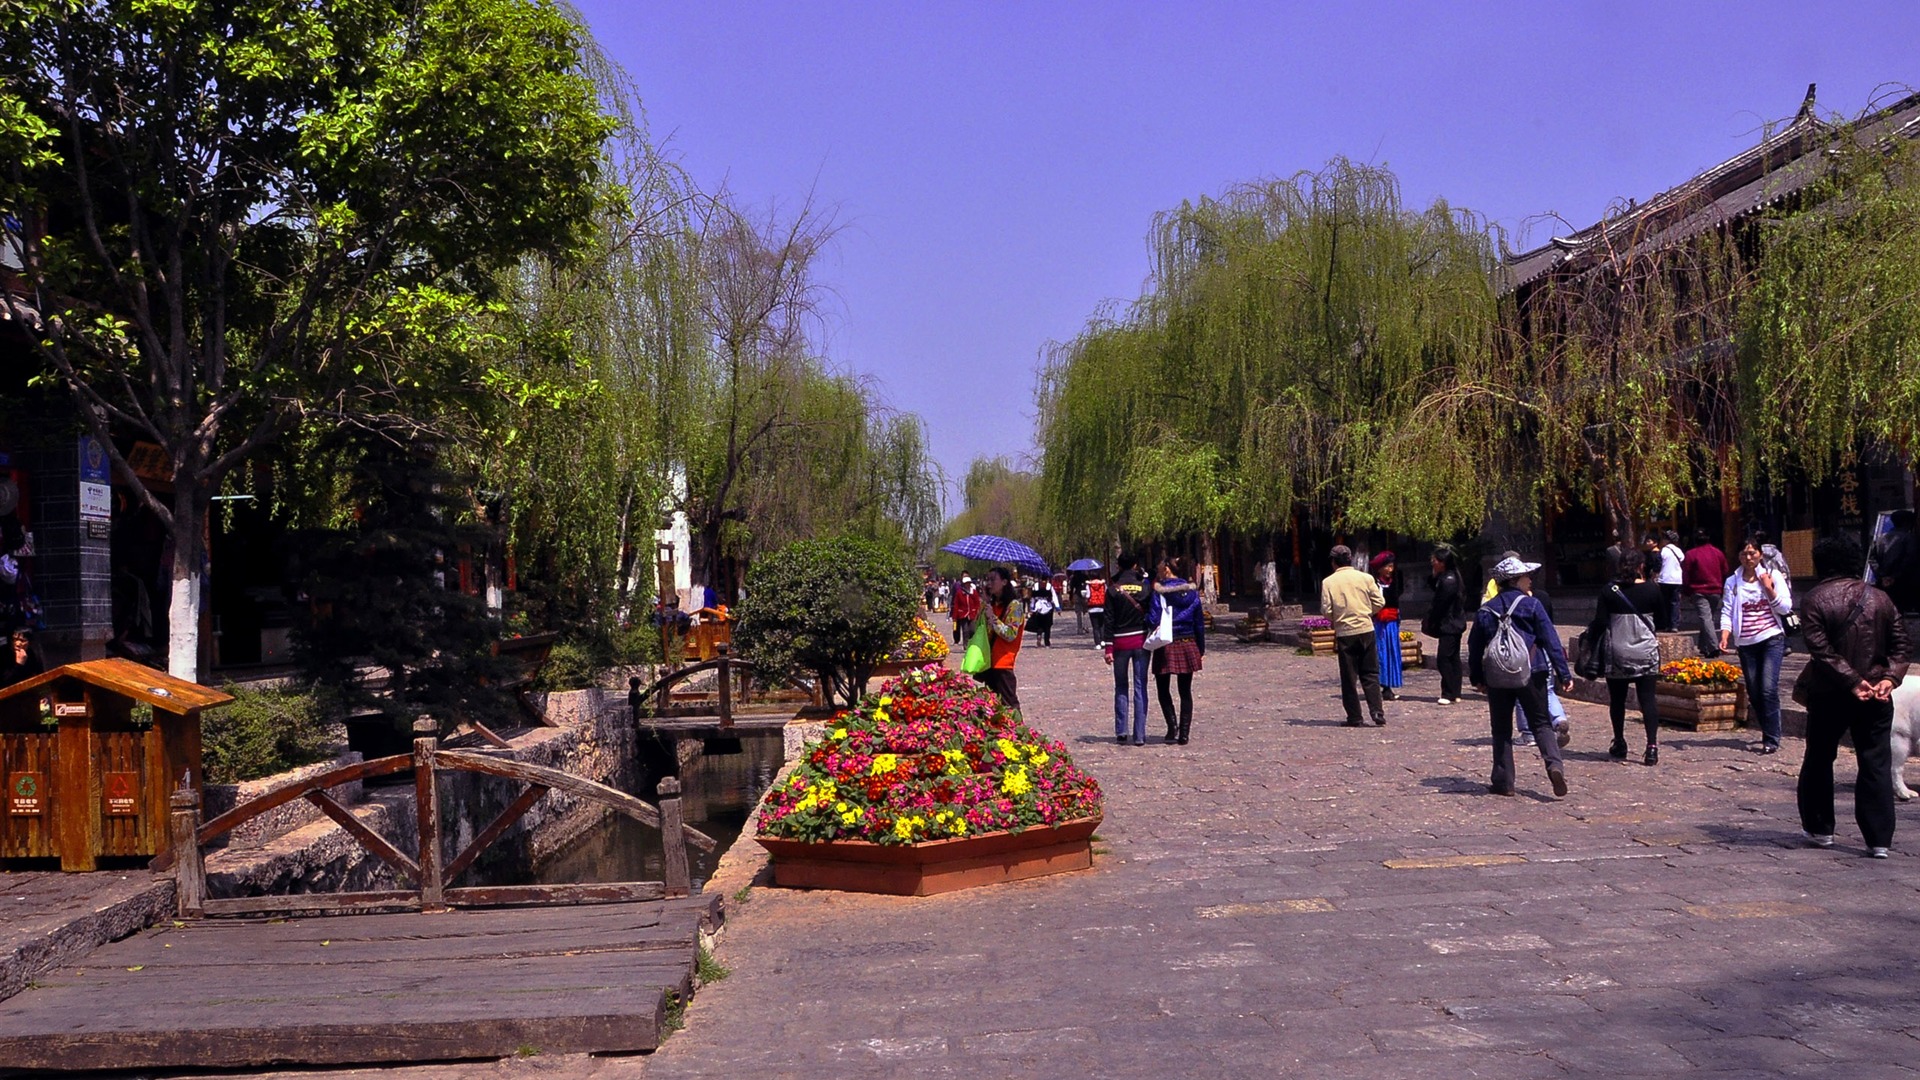 Lijiang ancient town atmosphere (2) (old Hong OK works) #25 - 1920x1080